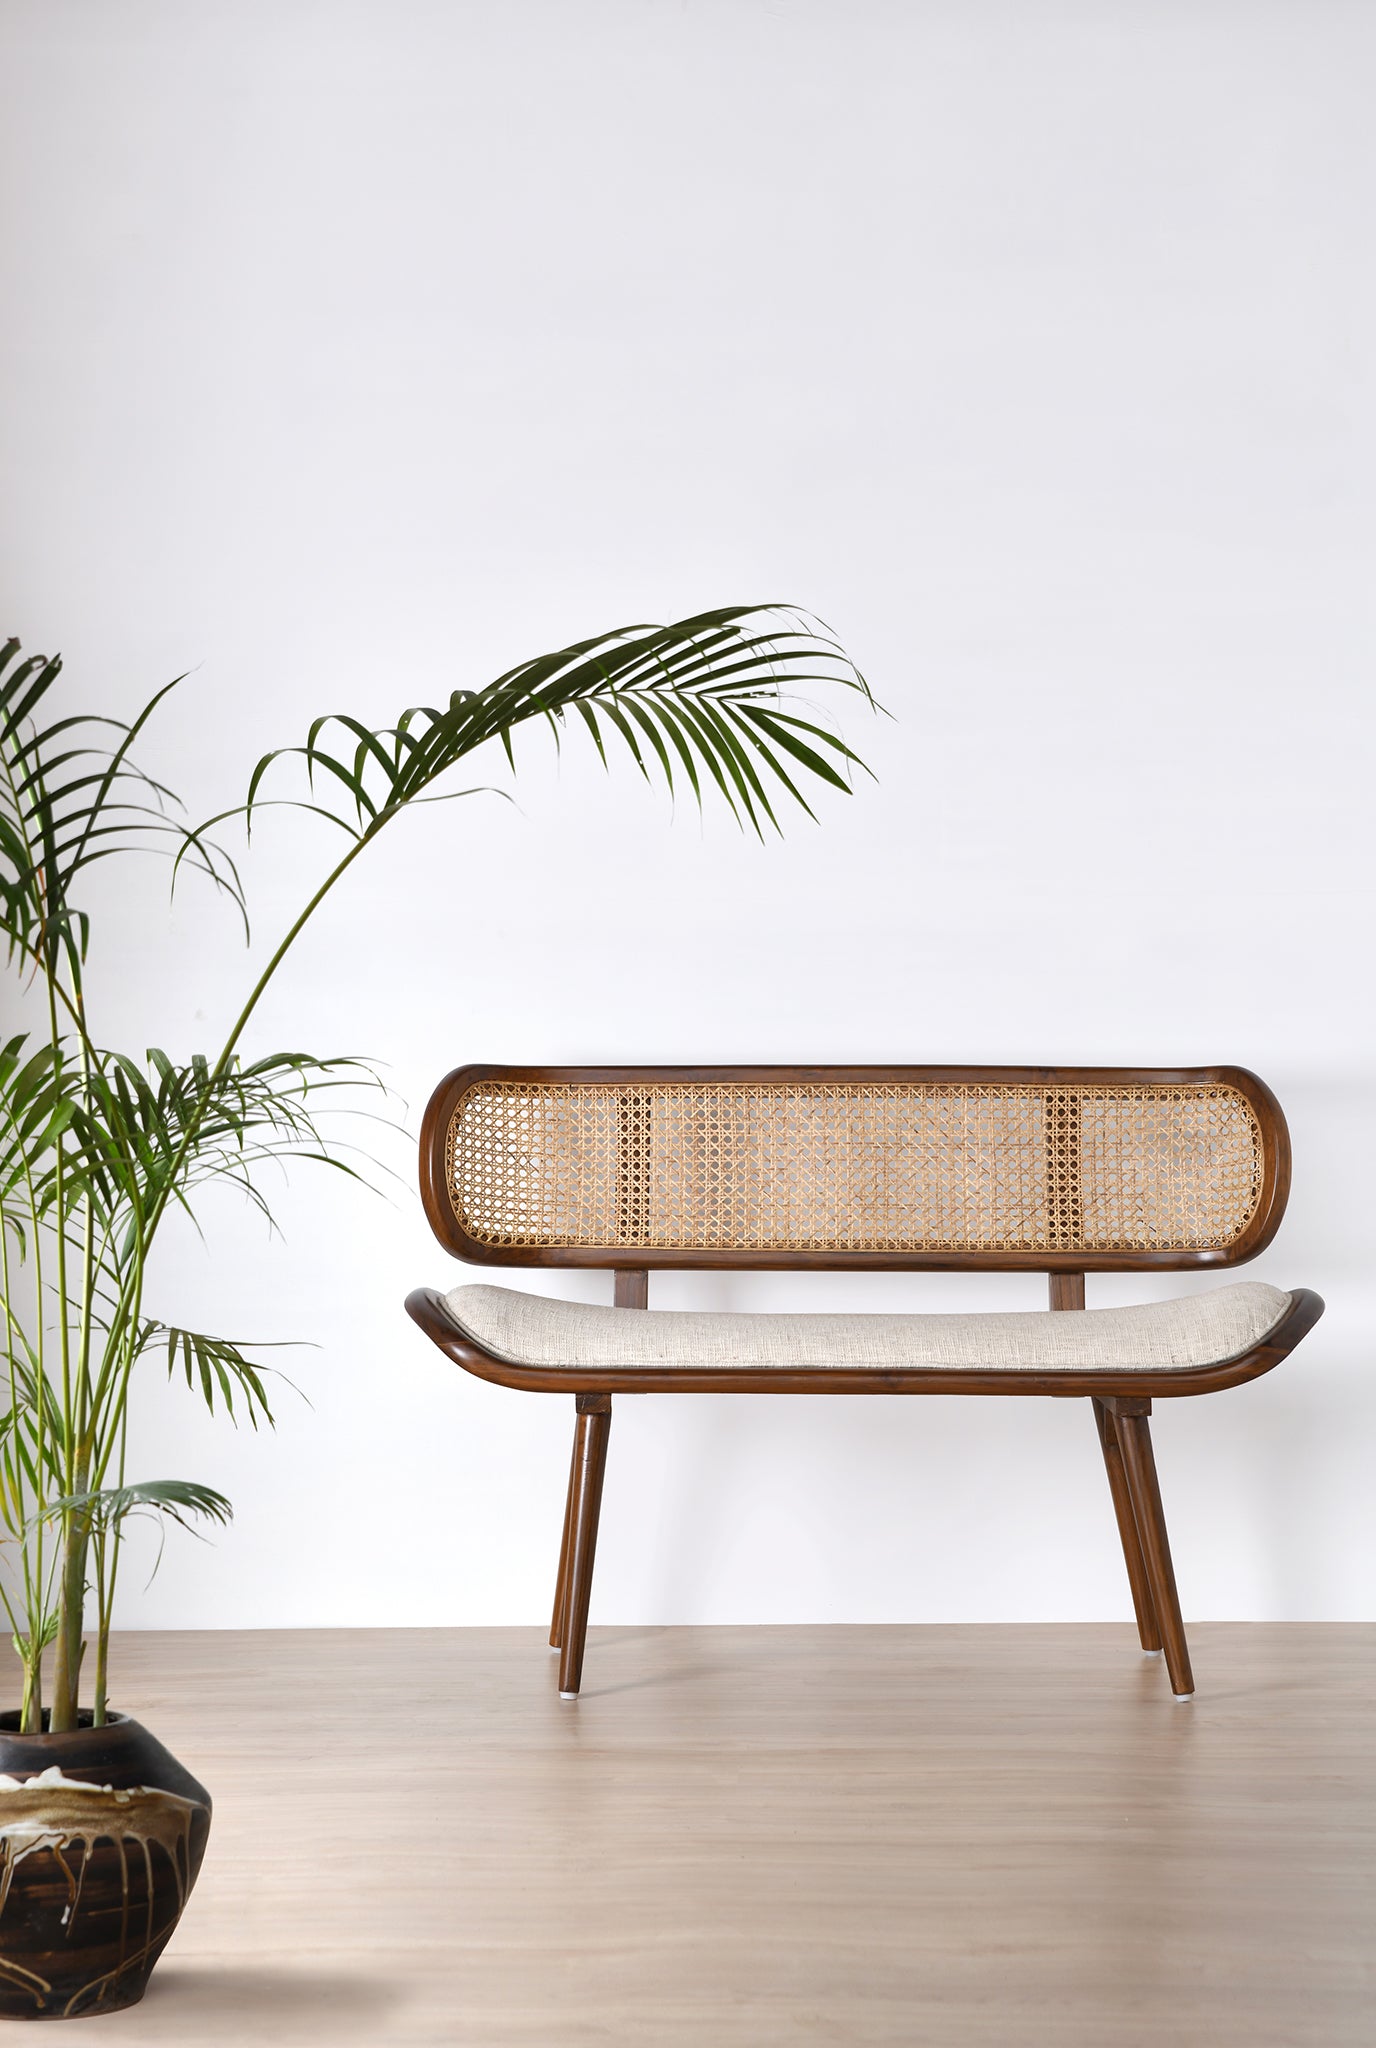 jodi-handcrafted-reusable-sustainable-bamboo-cane-teakwood-bench